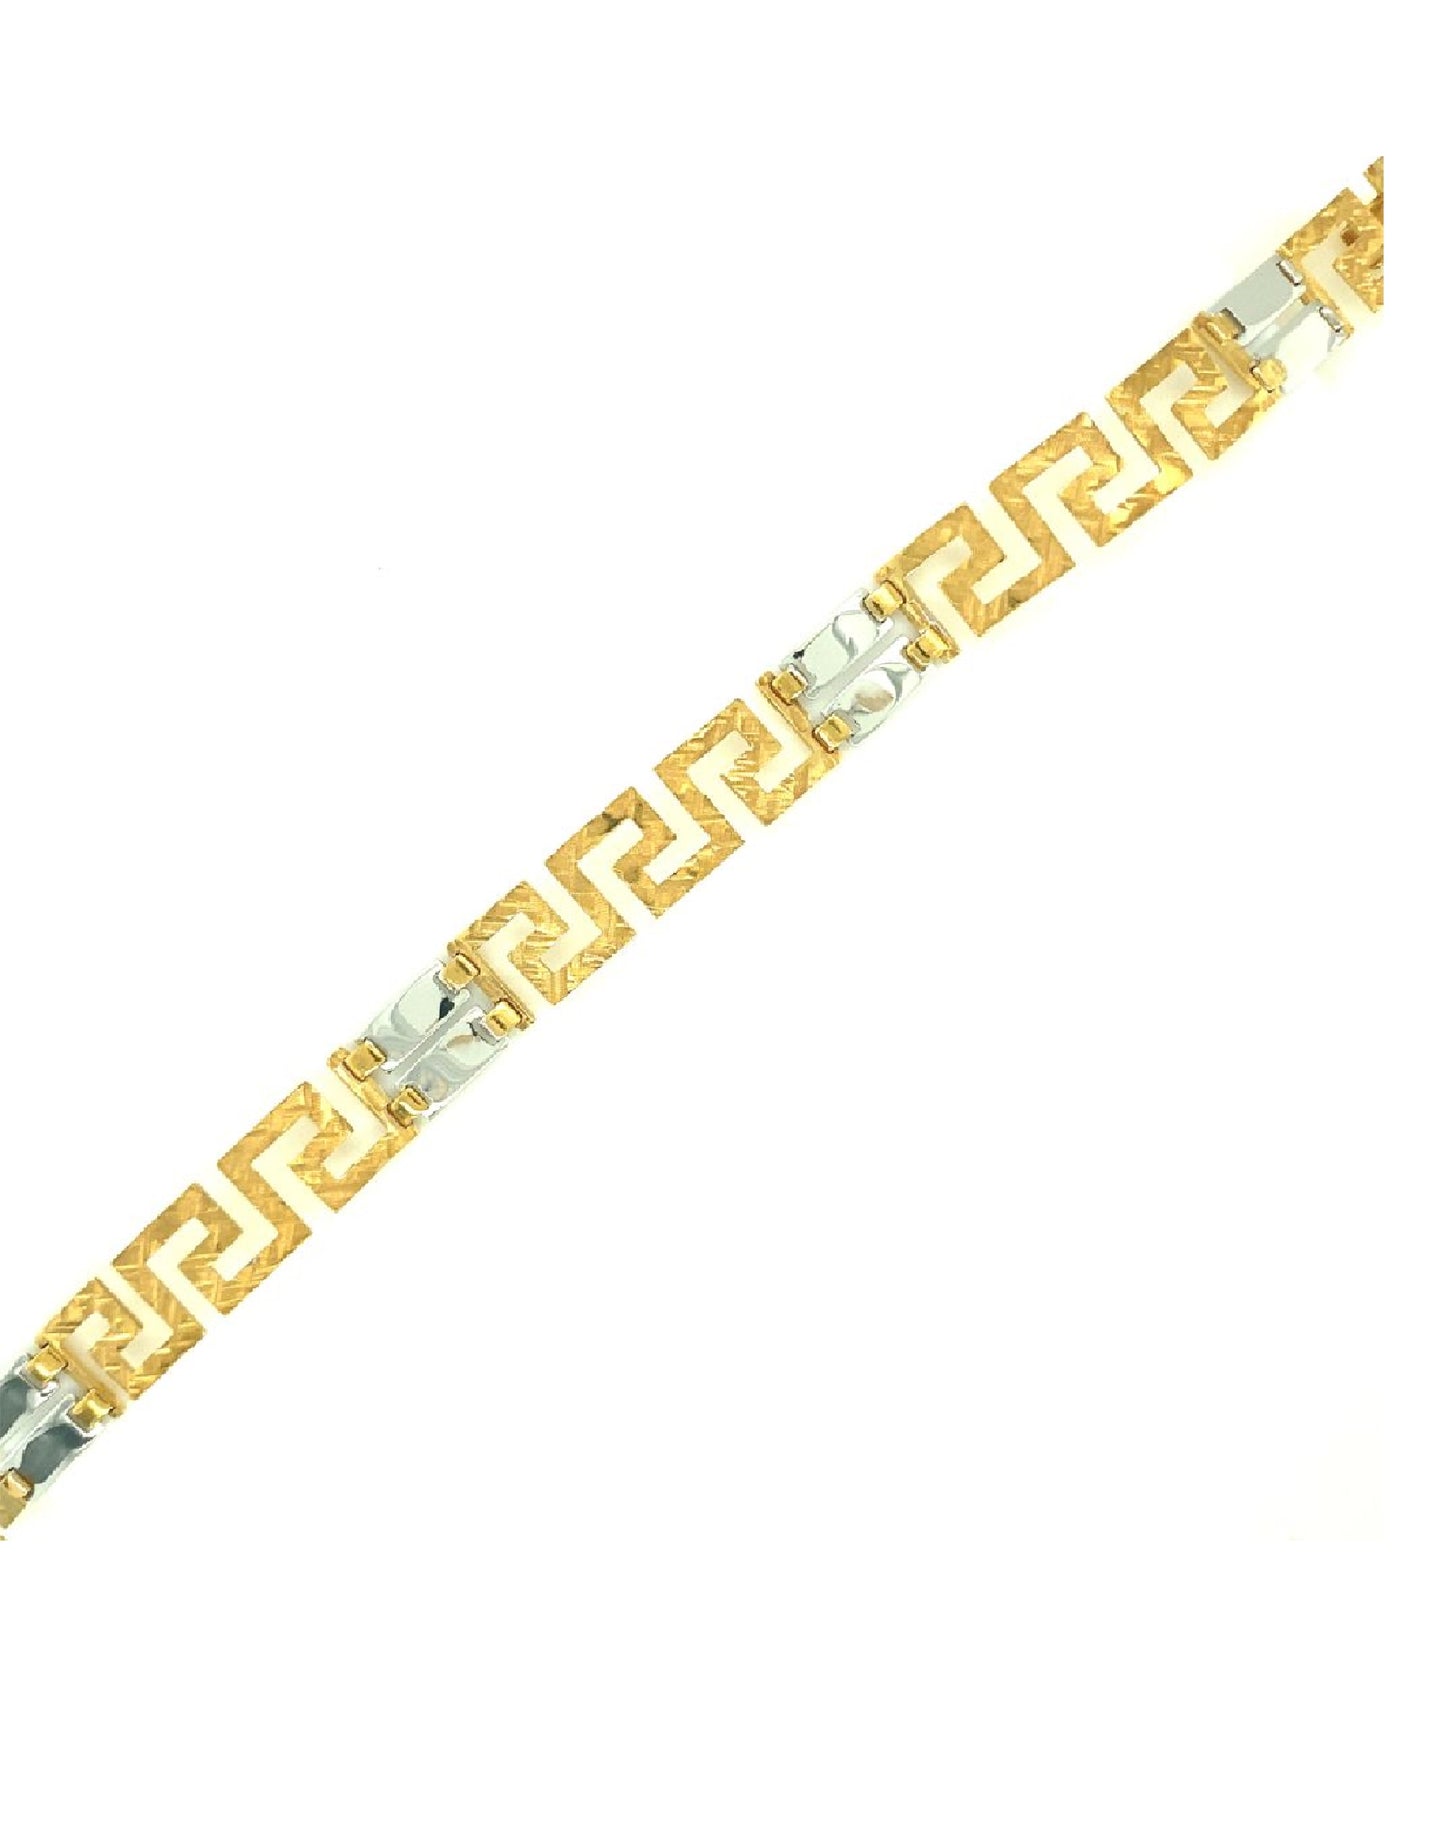 Gold 18 kt Zig - Zag Yellow & White Gold Bracelet 750mls Unisex Jewelry